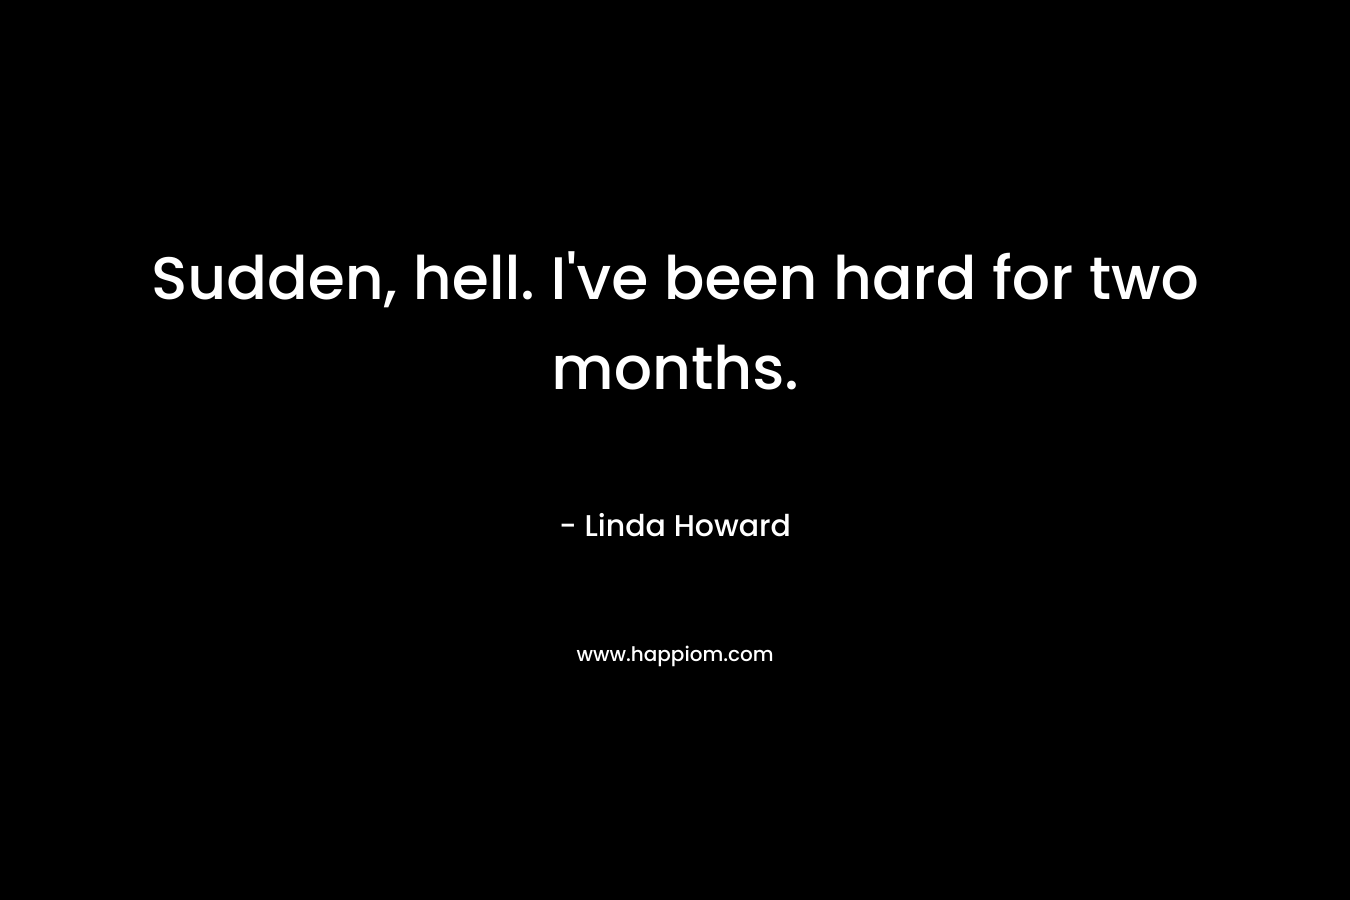 Sudden, hell. I’ve been hard for two months. – Linda Howard